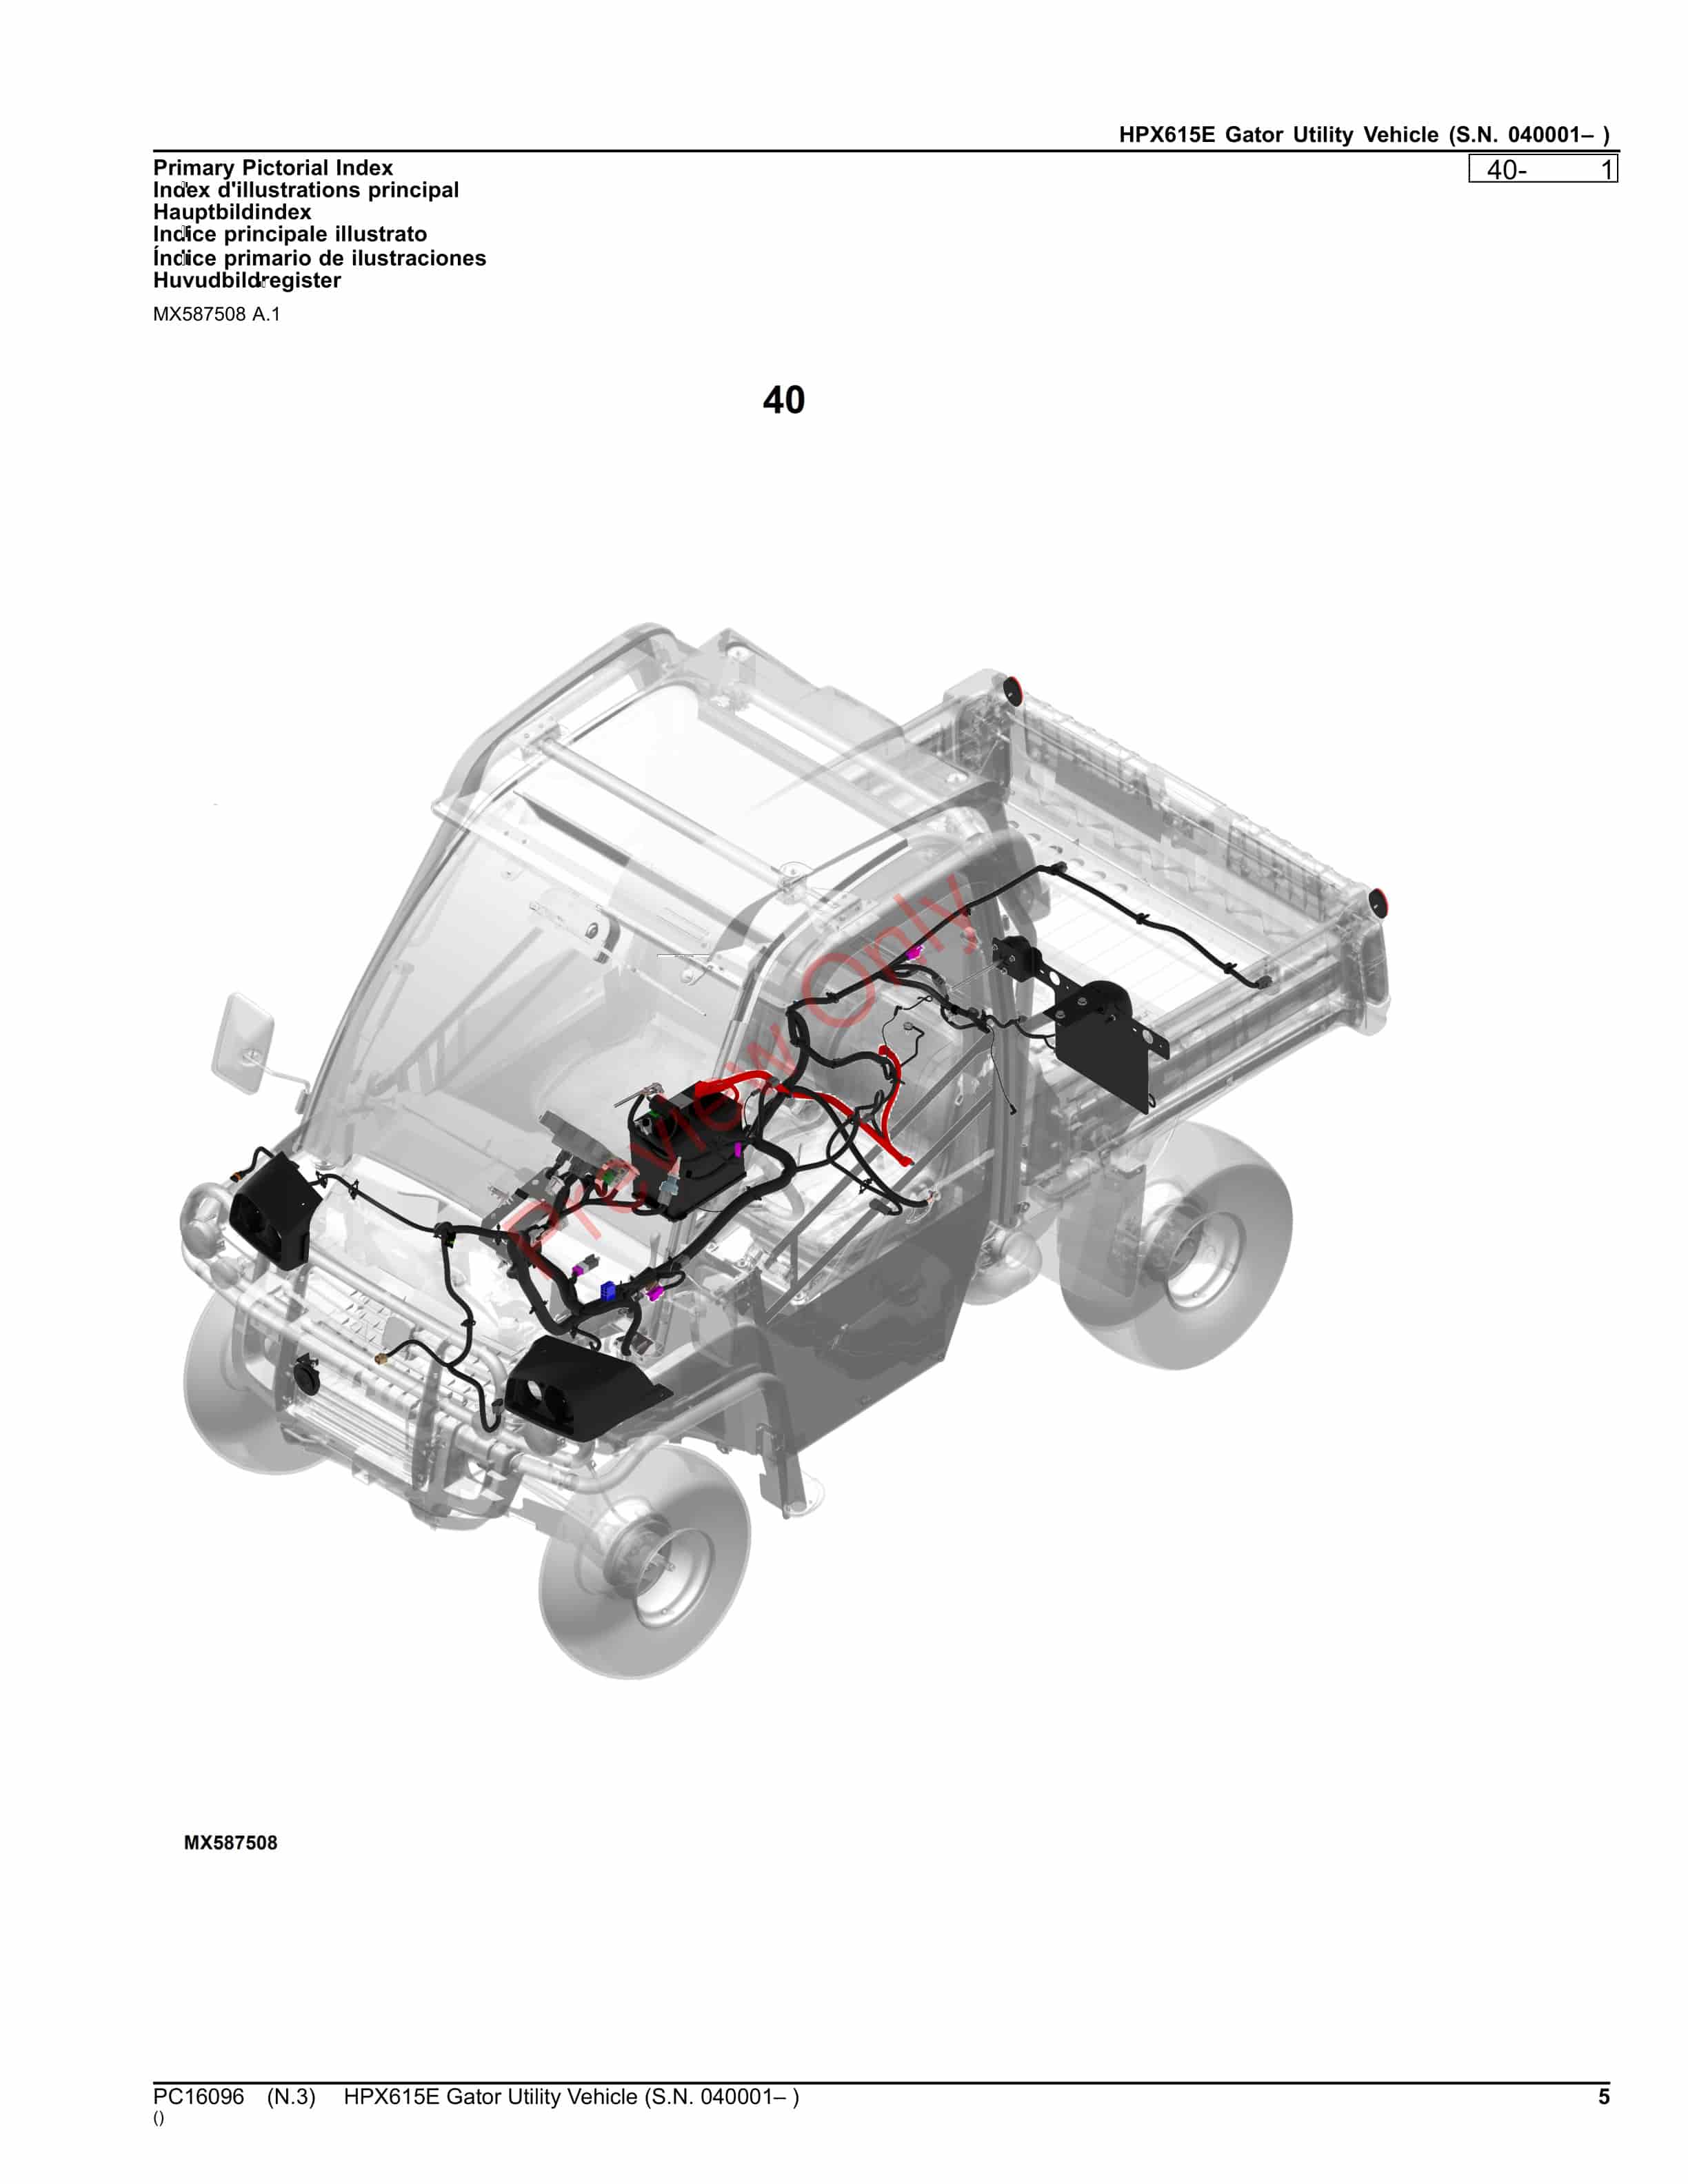 John Deere HPX615E Gator Utility Vehicle (S.N. 040001 ) Parts Catalog PC16096 10SEP23-5